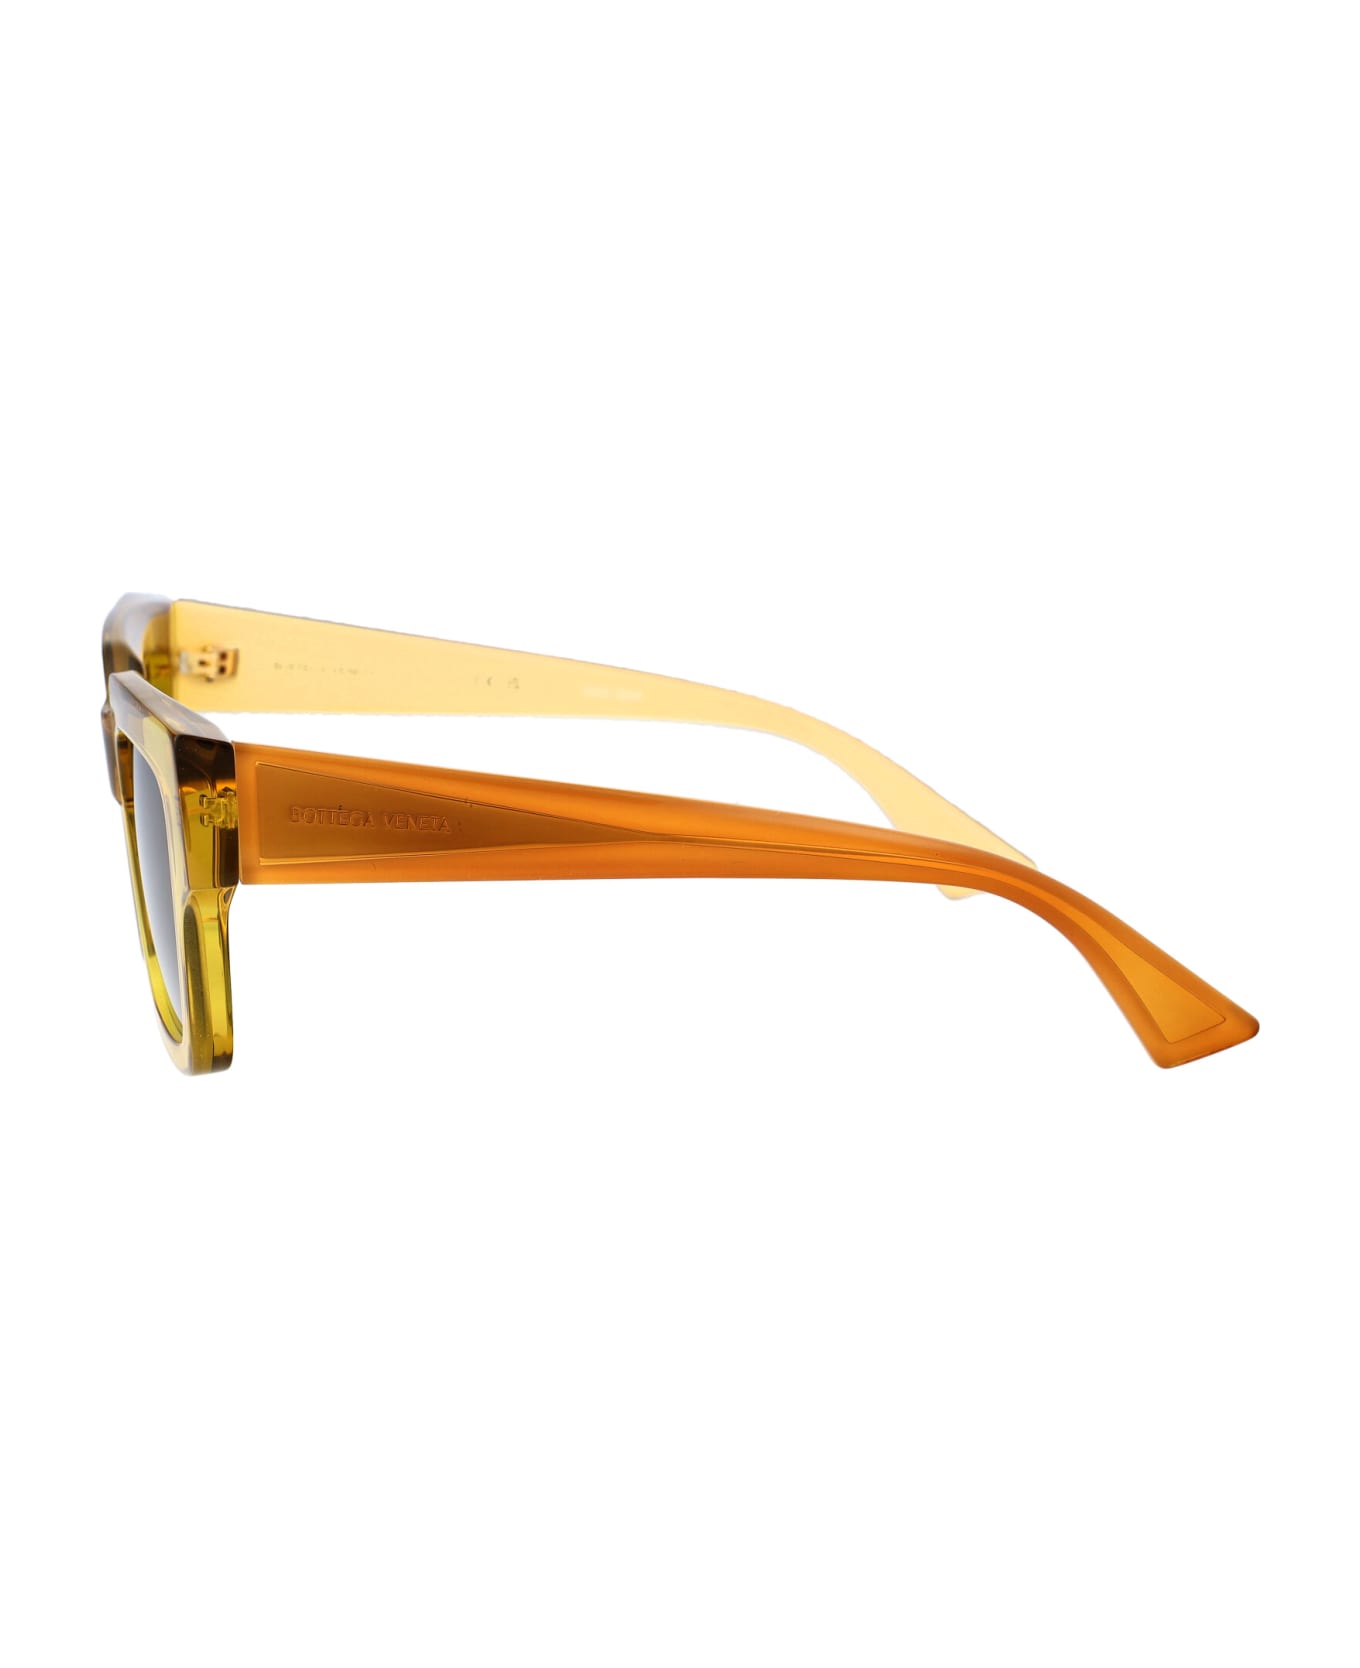 Bottega Veneta Eyewear Bv1276s Sunglasses - 004 YELLOW YELLOW BROWN サングラス